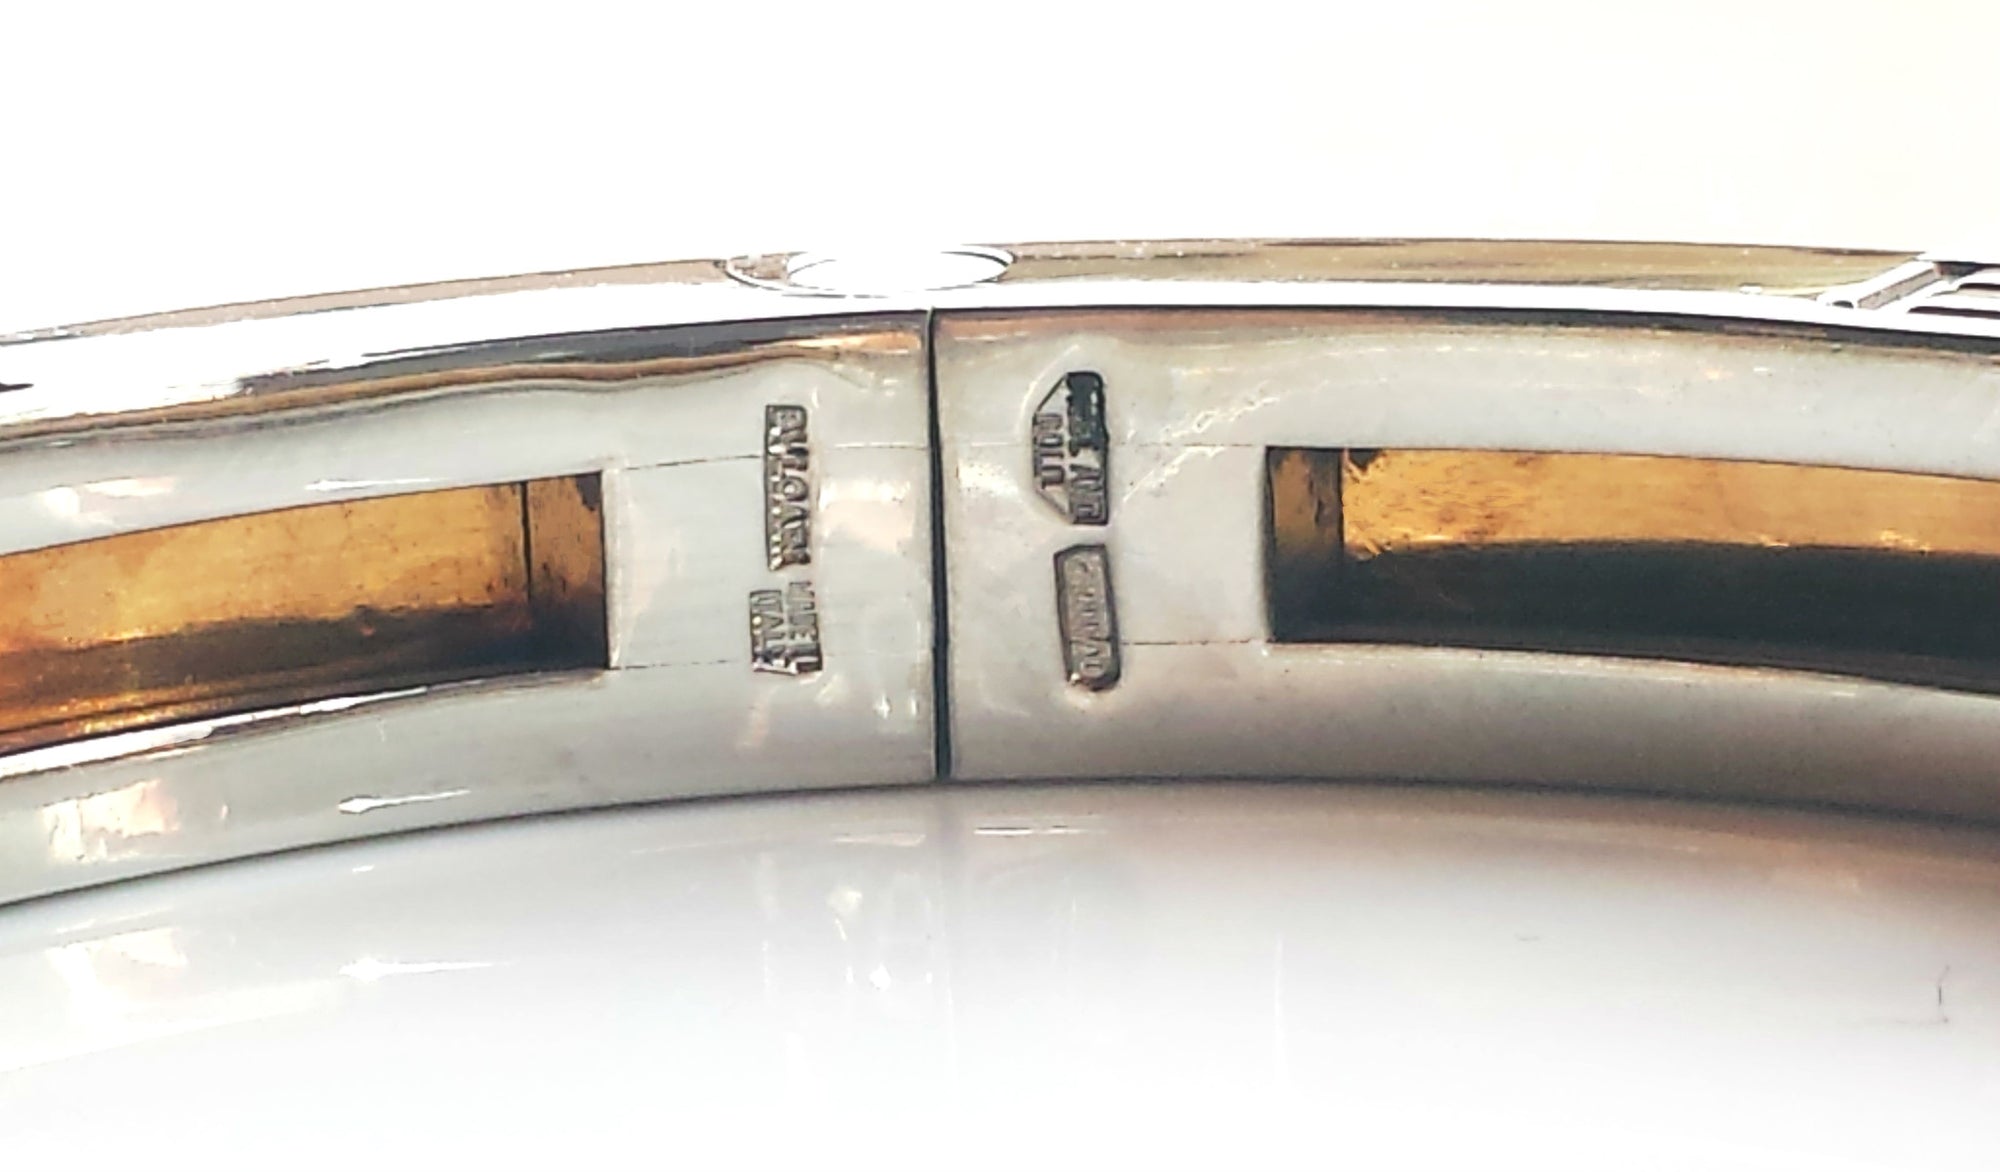 Bulgari B.Zero1 18K Gold & Steel Bangle Bracelet Large (19cm) 7.5 in